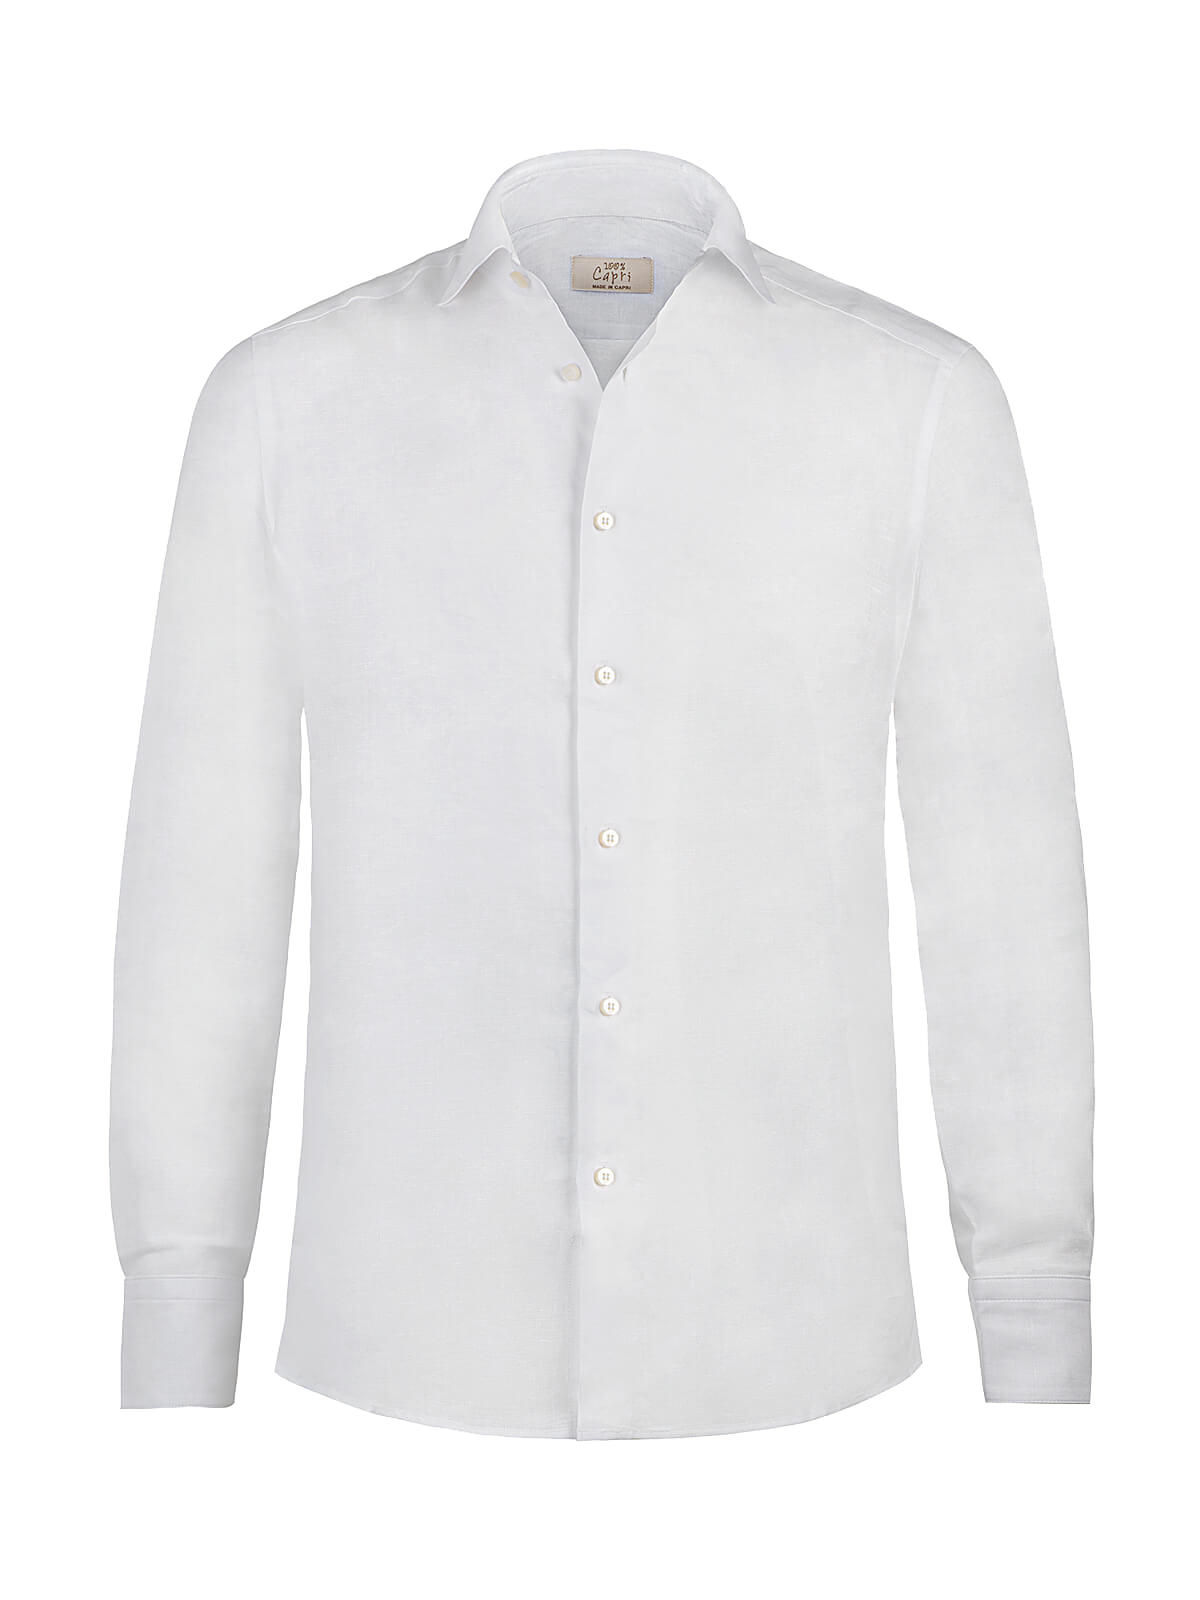 Camicia Mykonos 100% Capri white linen shirt front